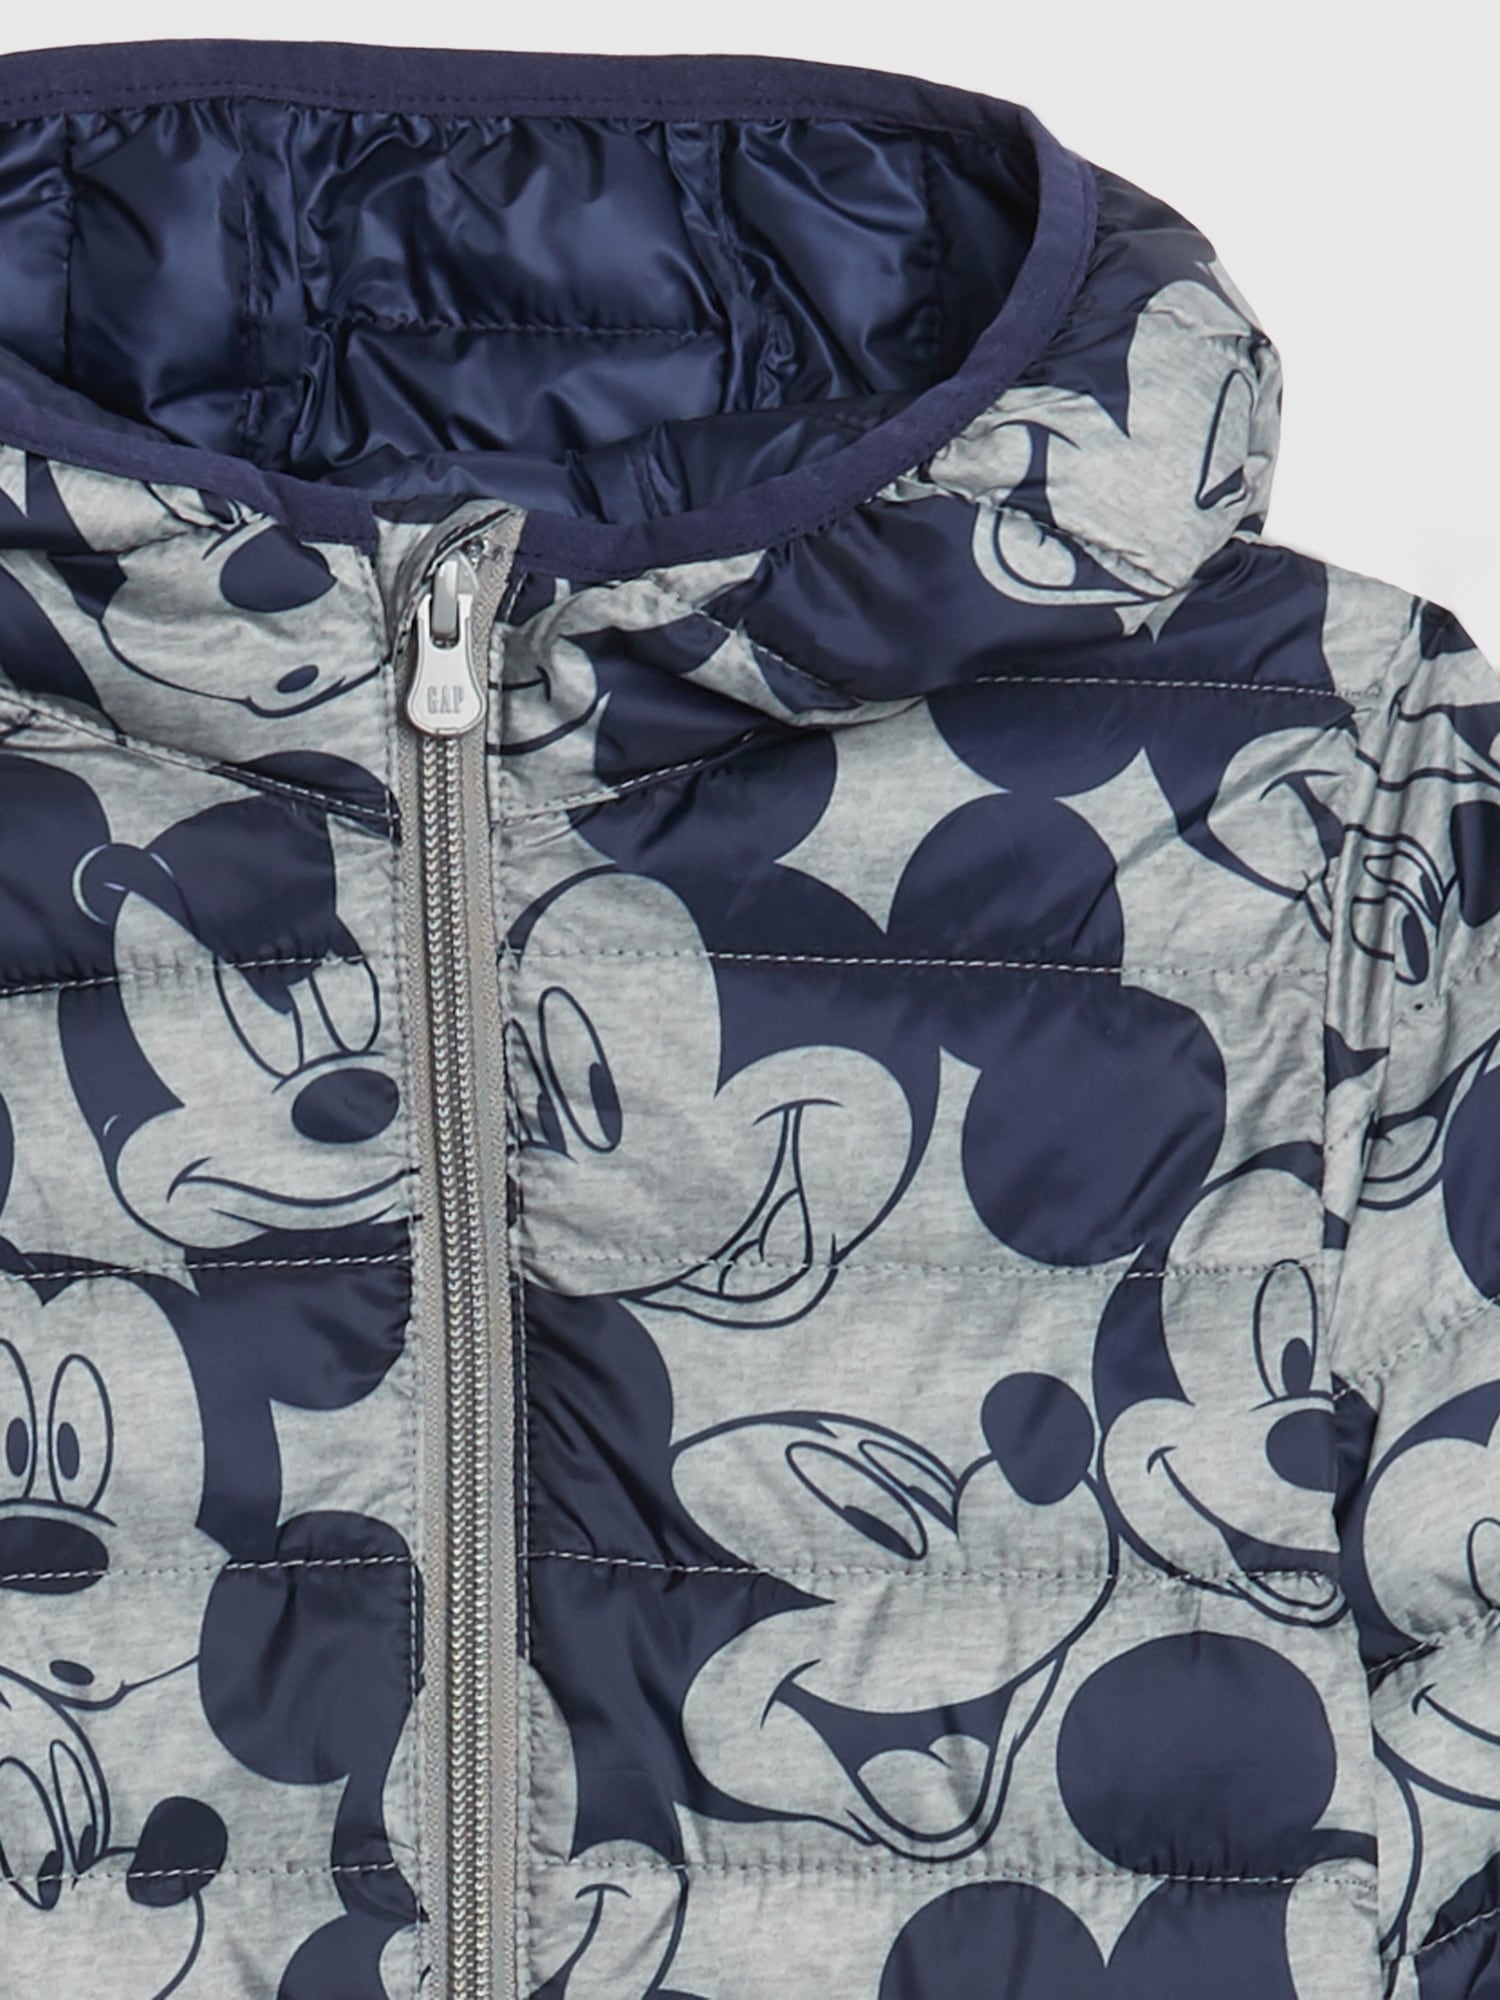 mickey mouse jacket gap